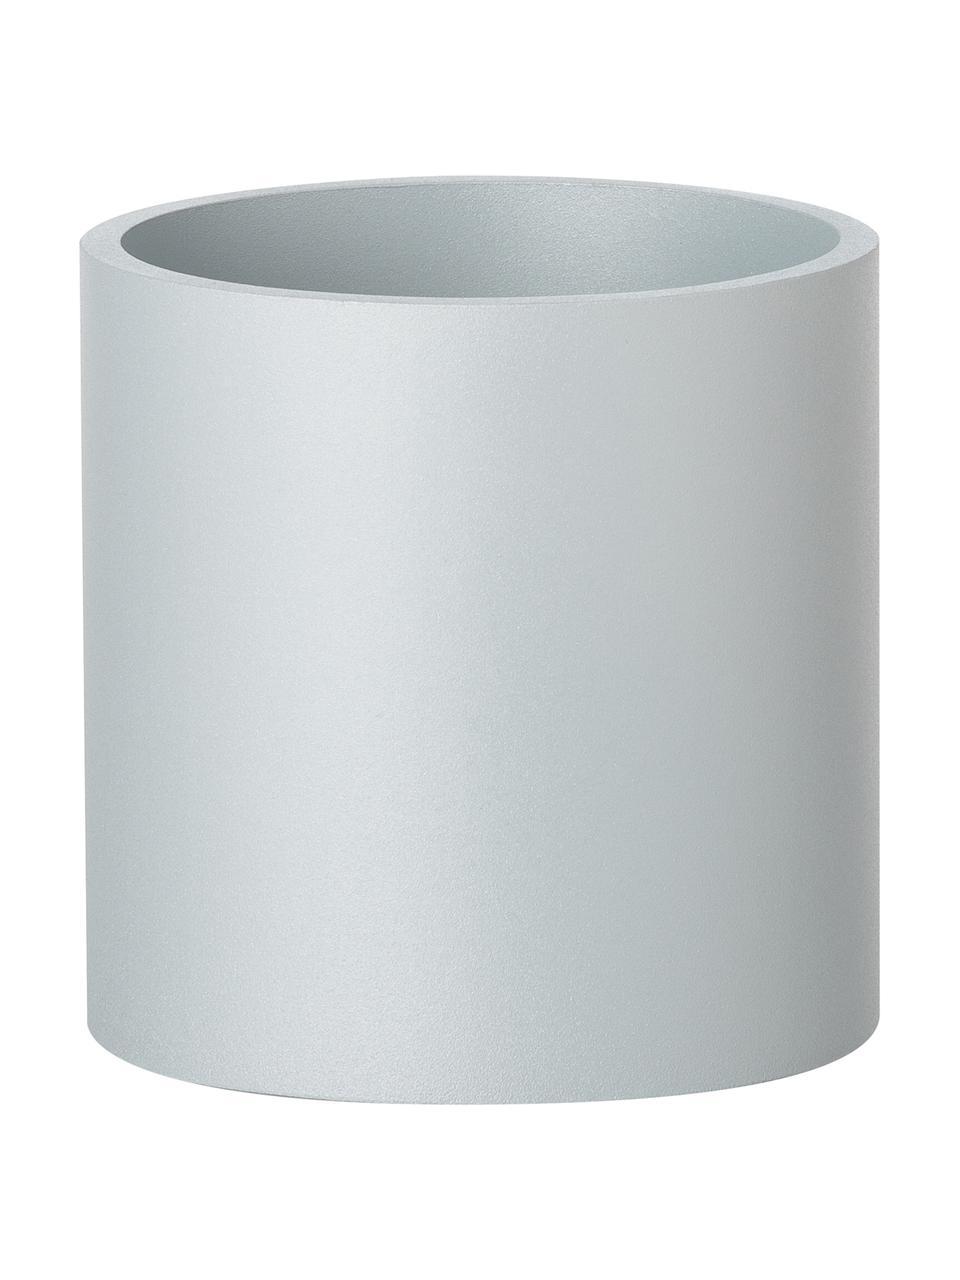 Kleine Wandleuchte Roda in Grau, Lampenschirm: Aluminium, pulverbeschich, Grau, B 10 x H 10 cm